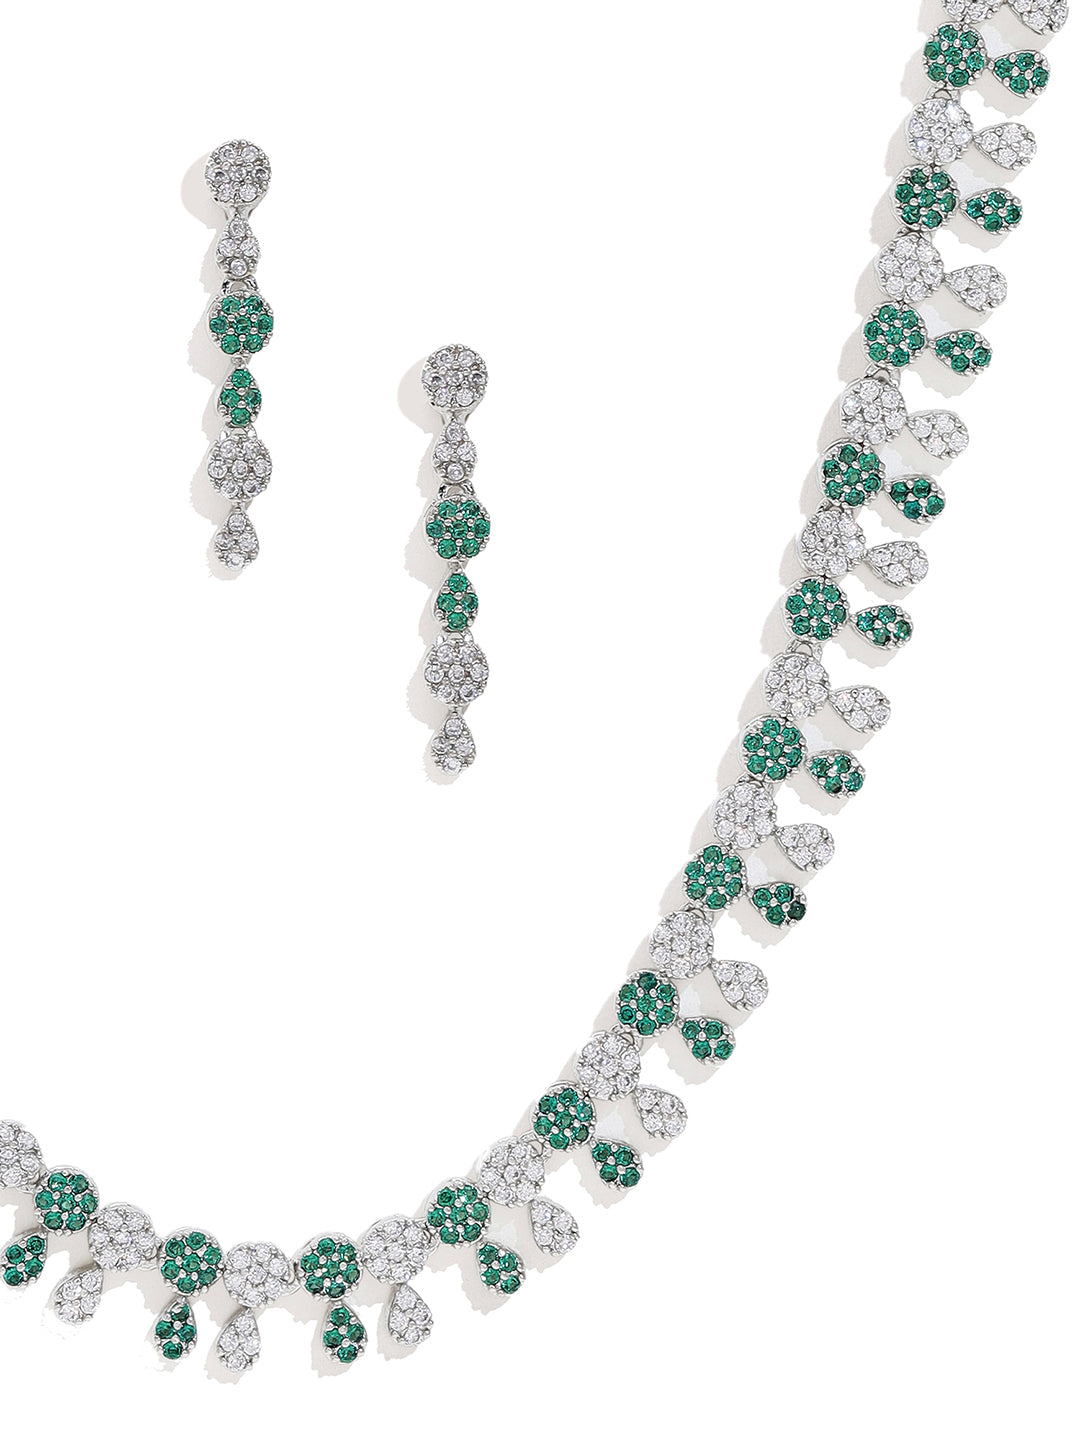 Priyaasi Silver-Plated Splendor with American Diamonds and Enchanting Green Stones